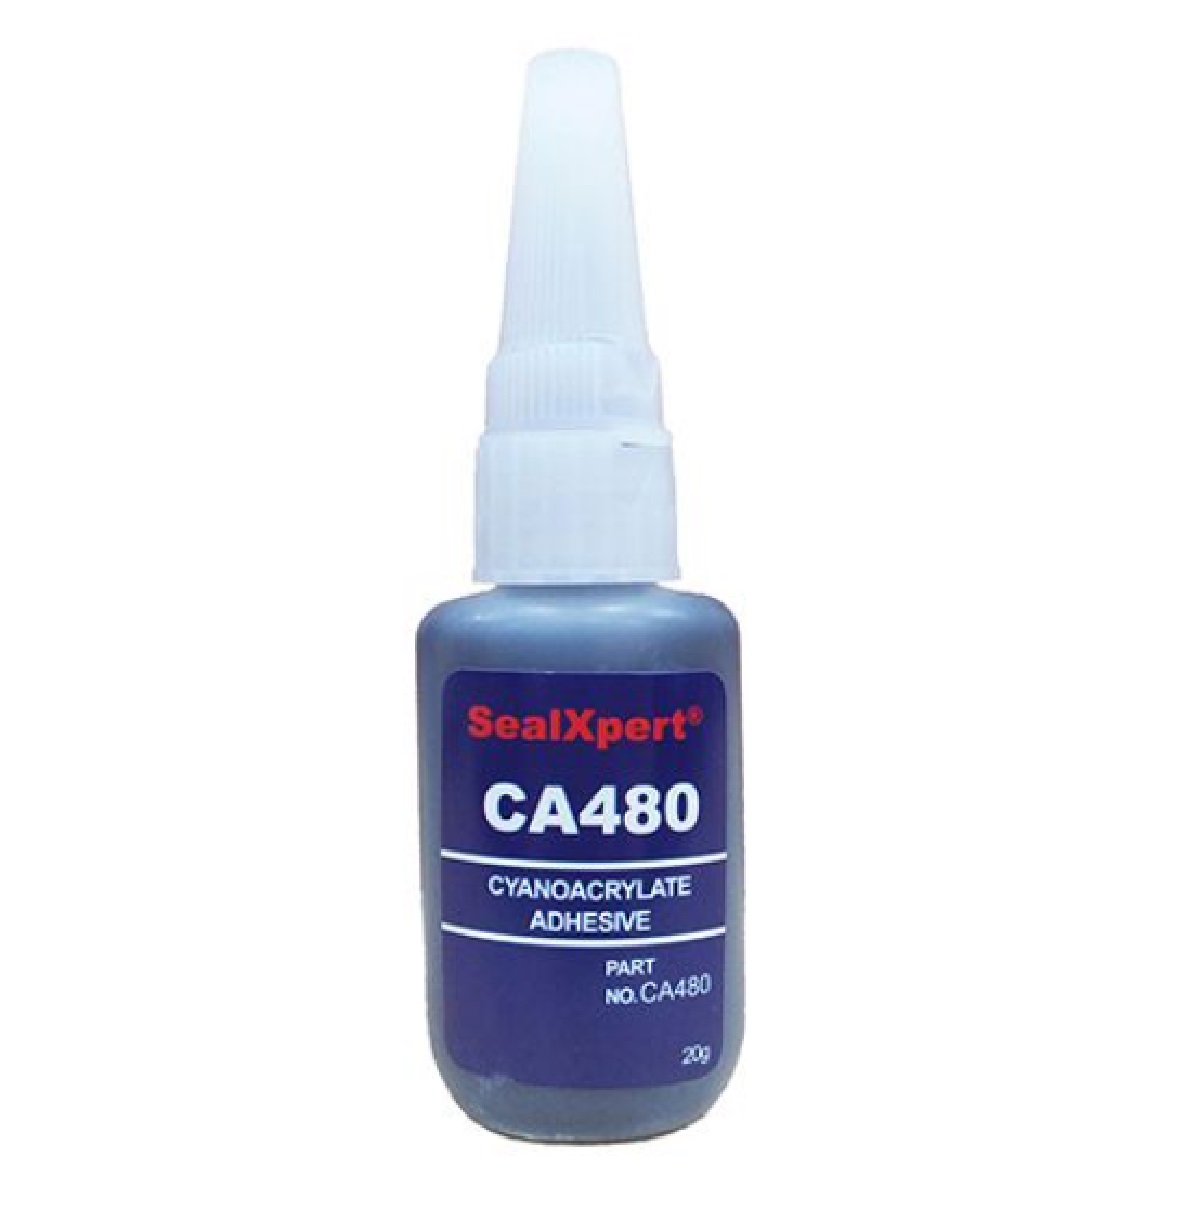 SealXpert CA480 Cyanoacrylate Adhesive Black 20g